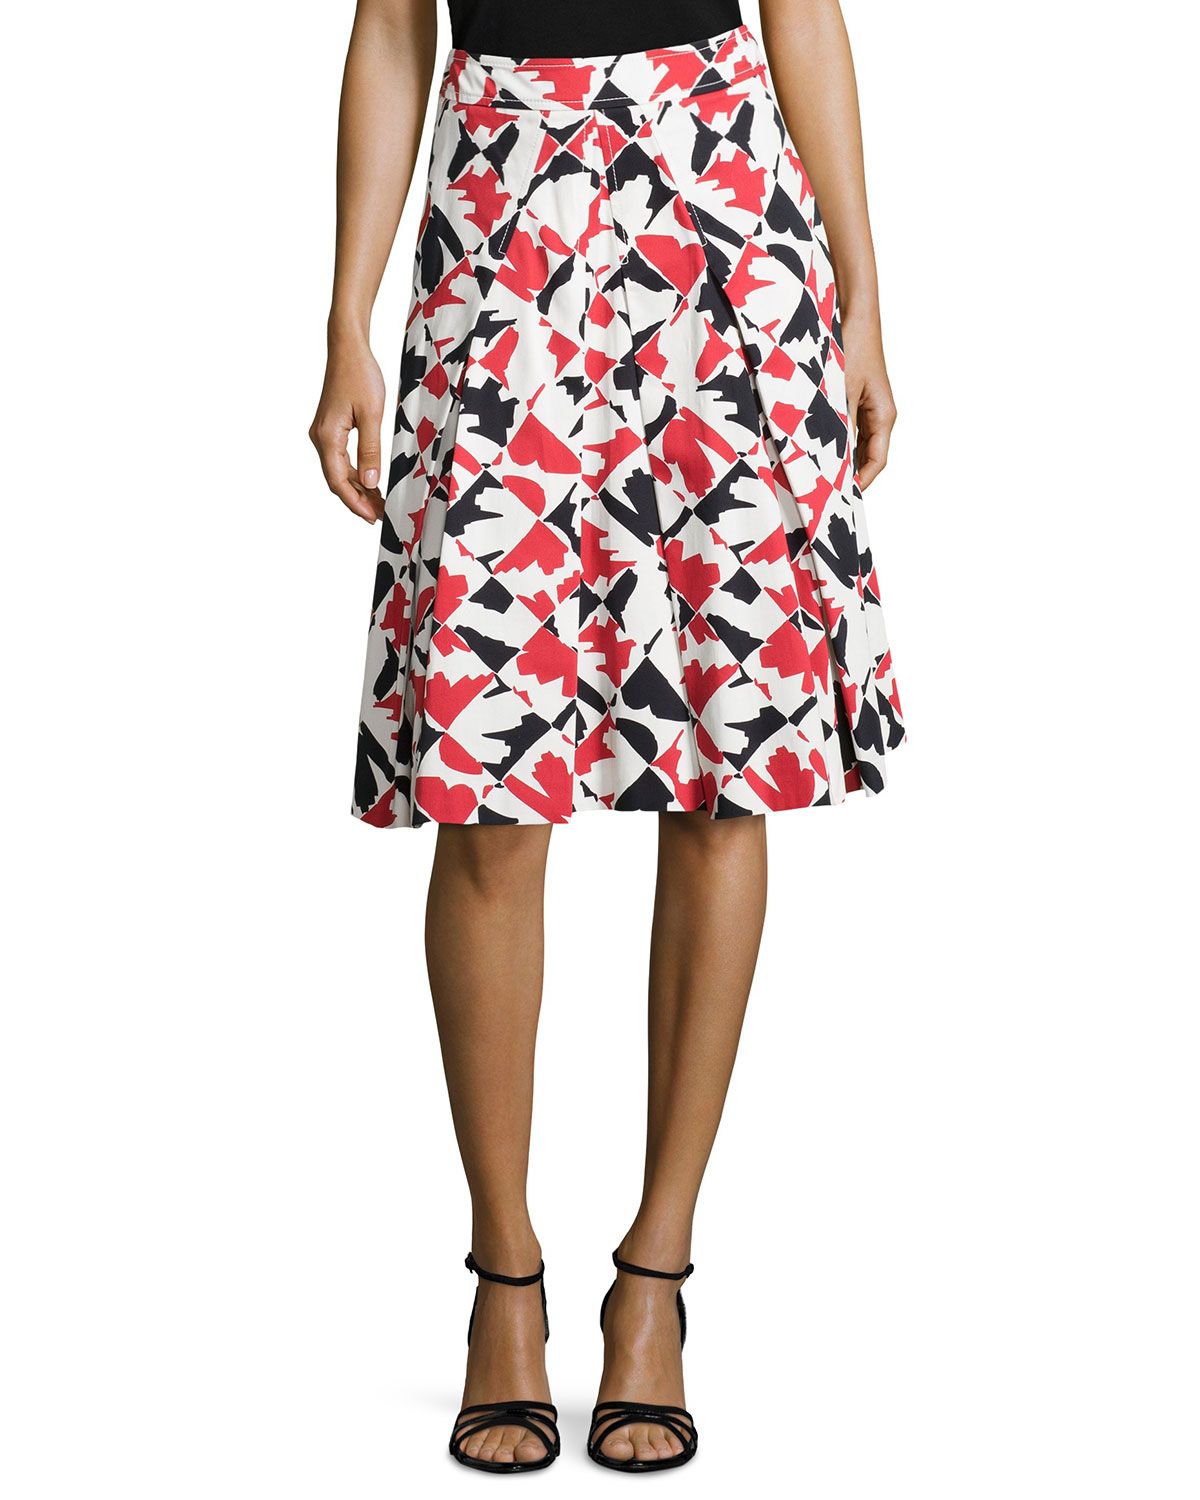 Carolina herrera Diamond-Print A-Line Skirt in Red | Lyst